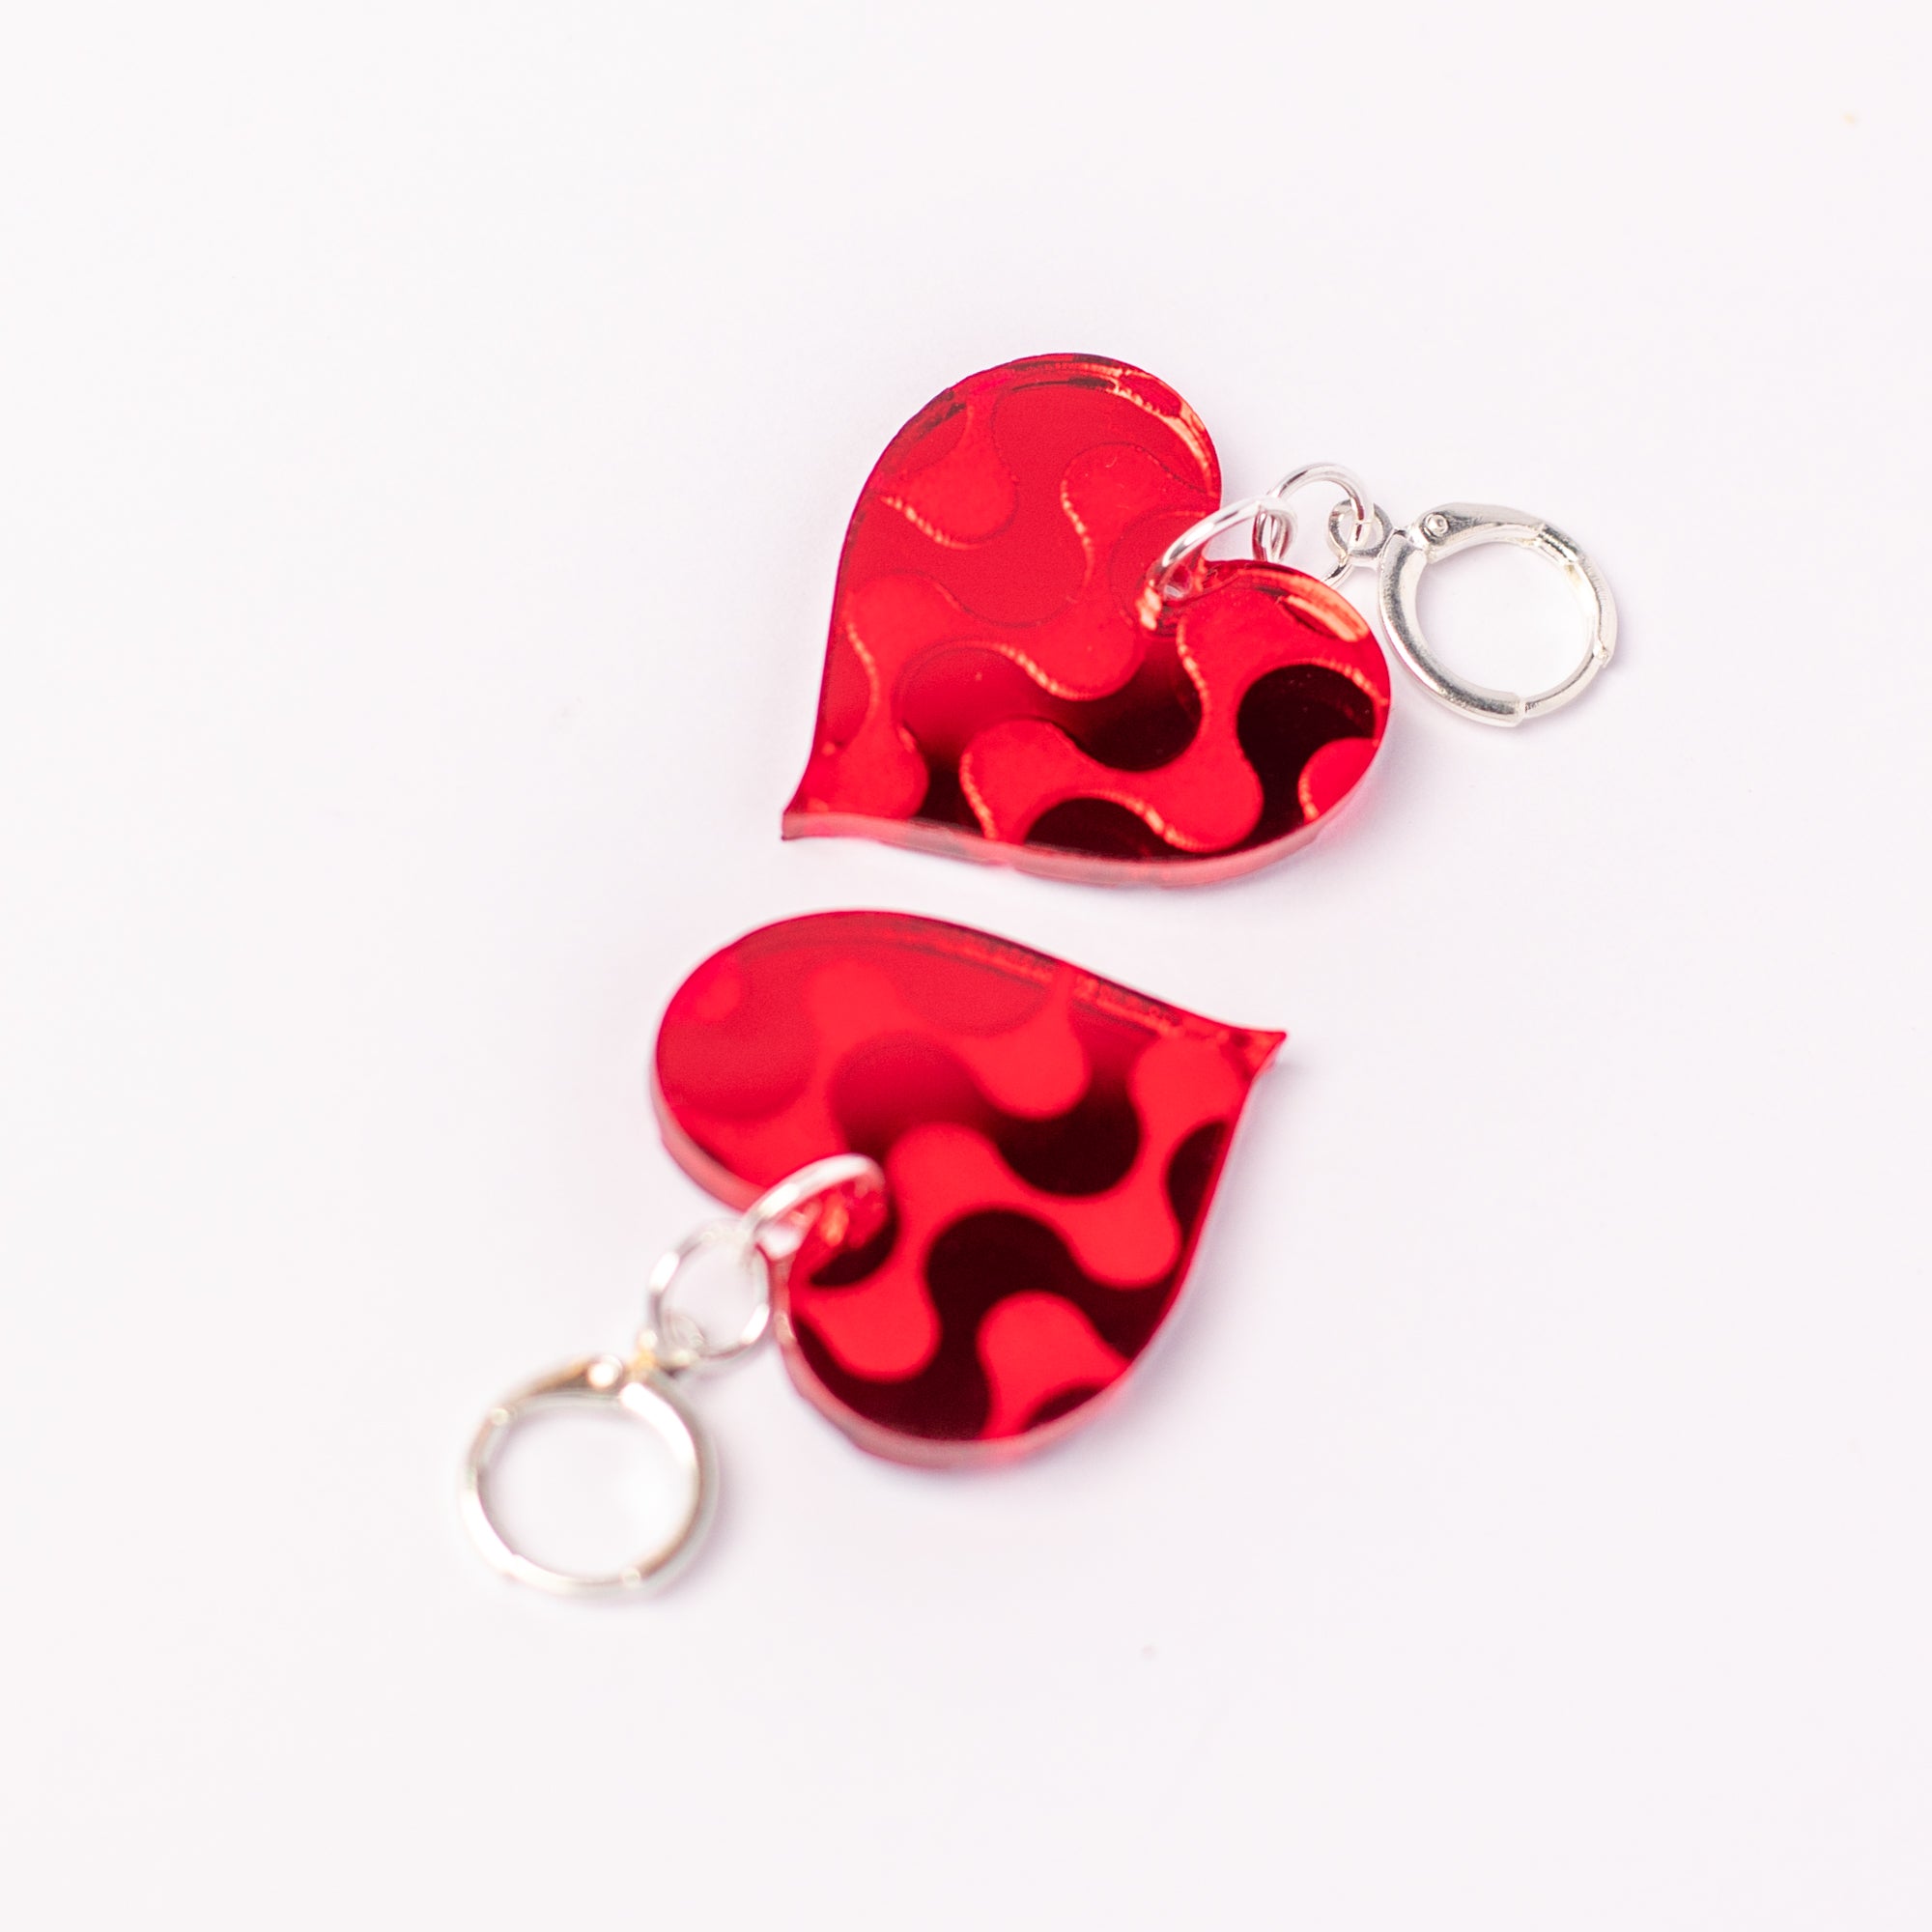 Engraved Heart Dangle Earrings